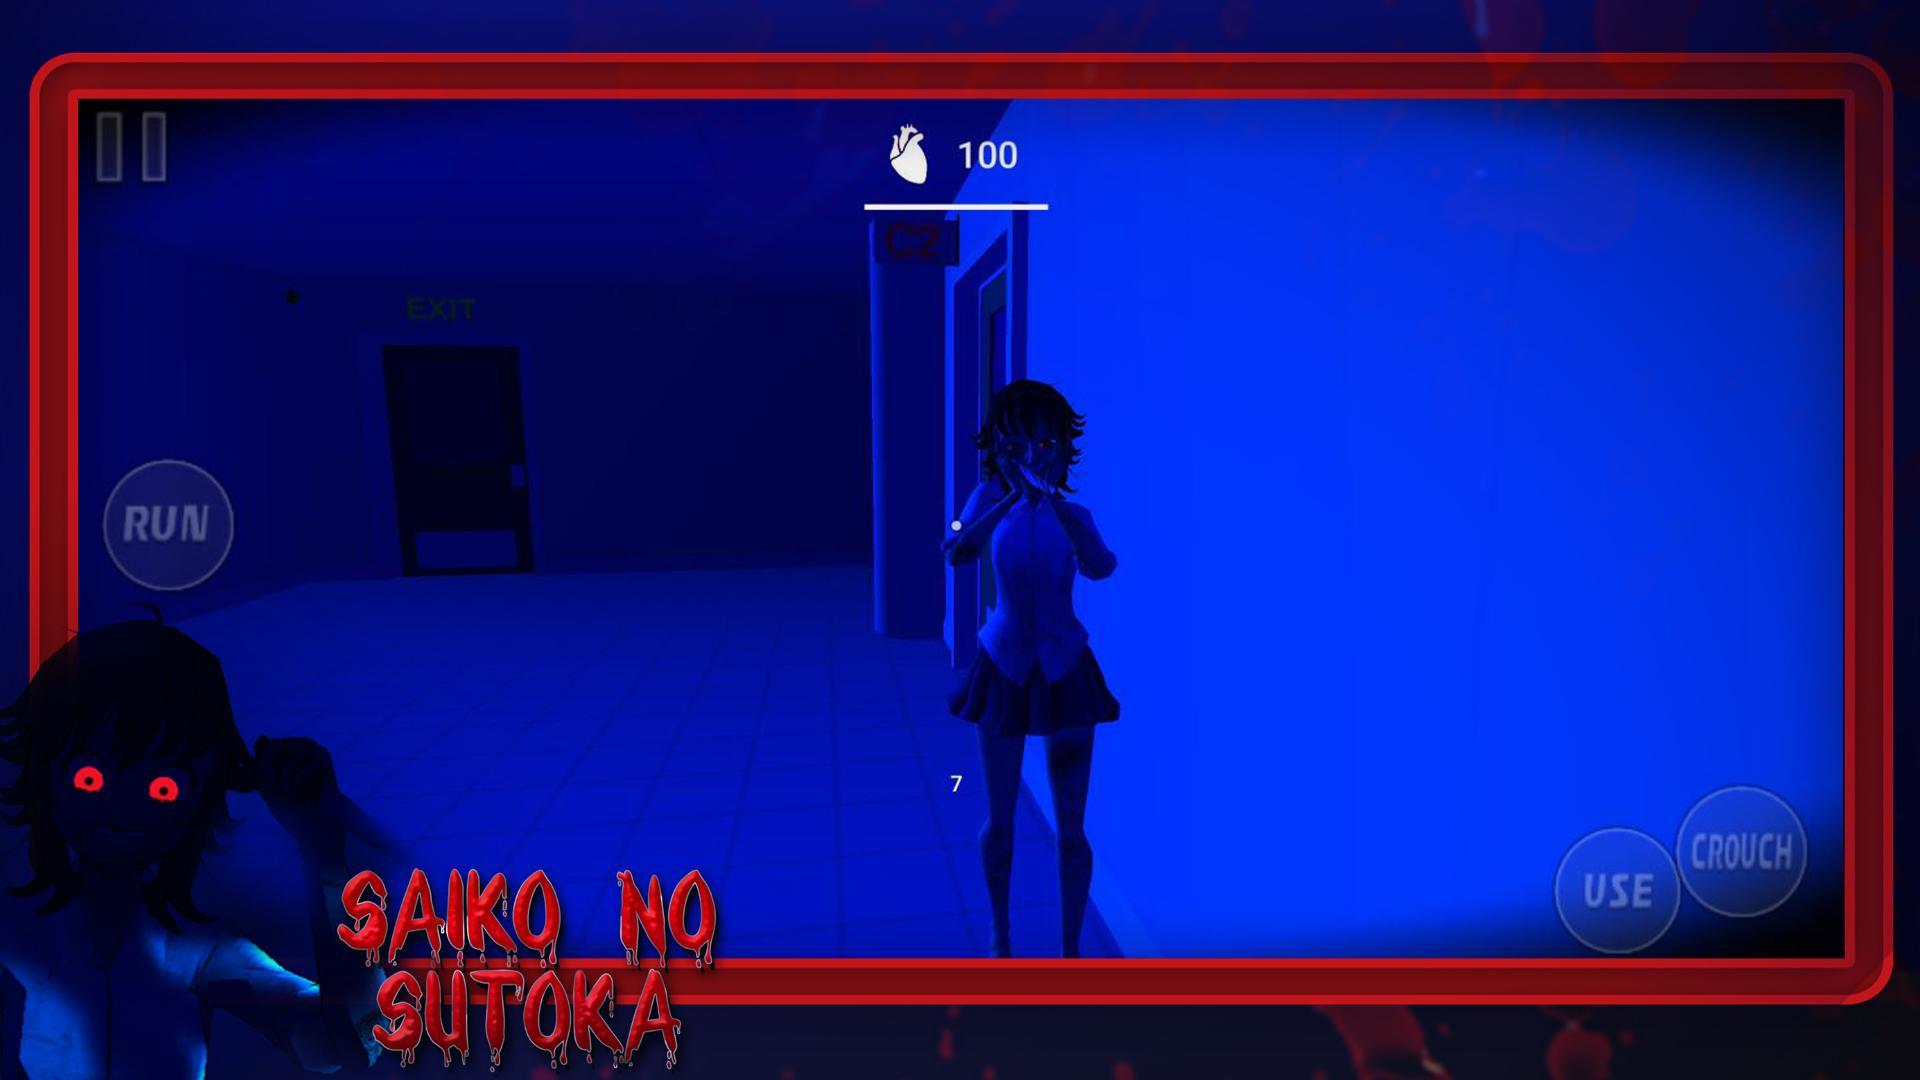 Saiko No Sutoka APK for Android Download